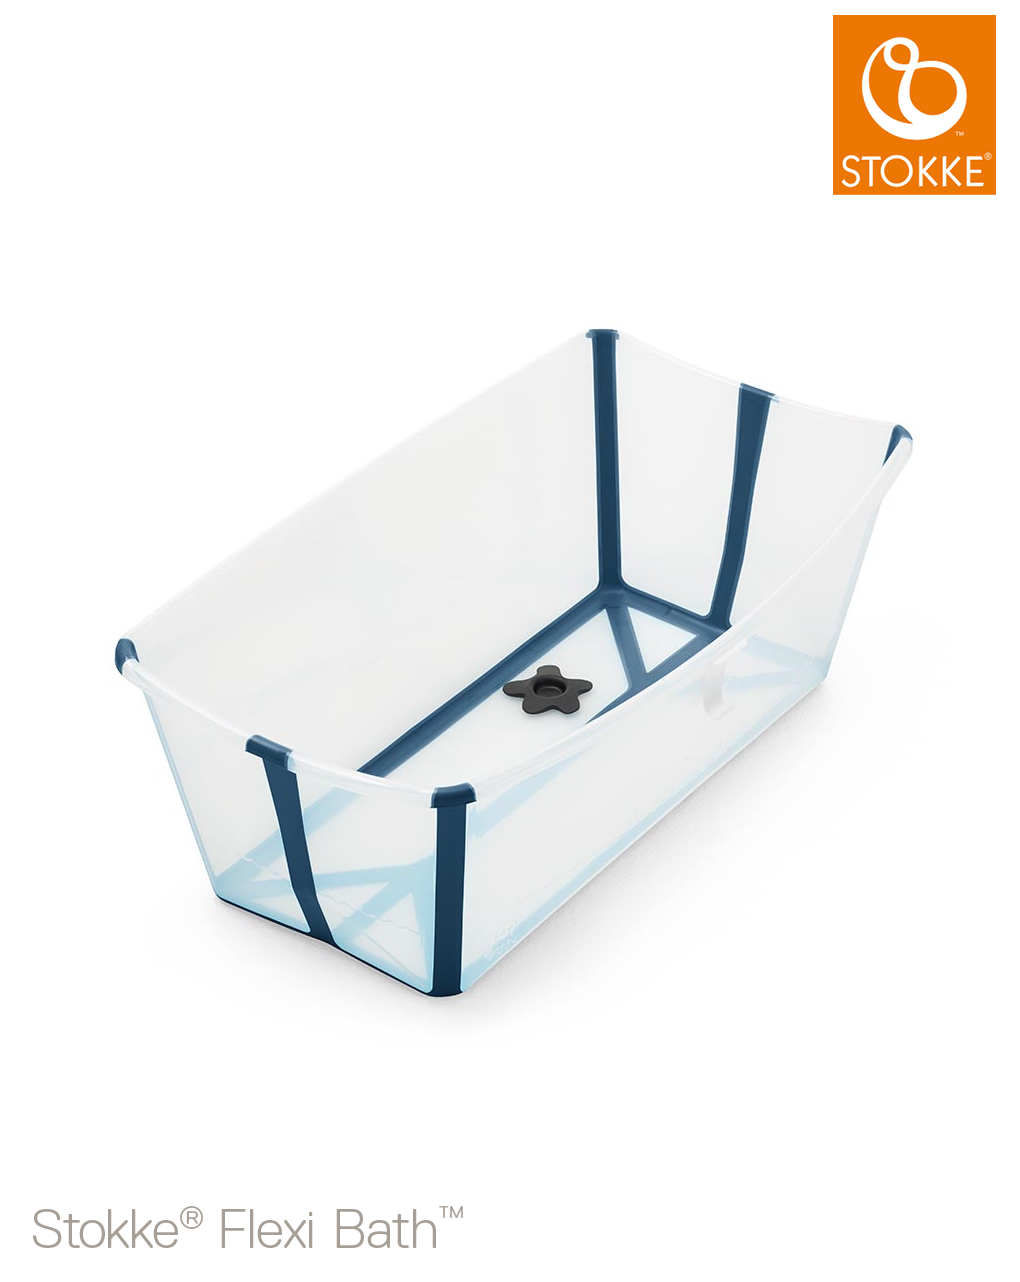 Bañera flexi bath trasparent blue tapón termosensible - Stokke